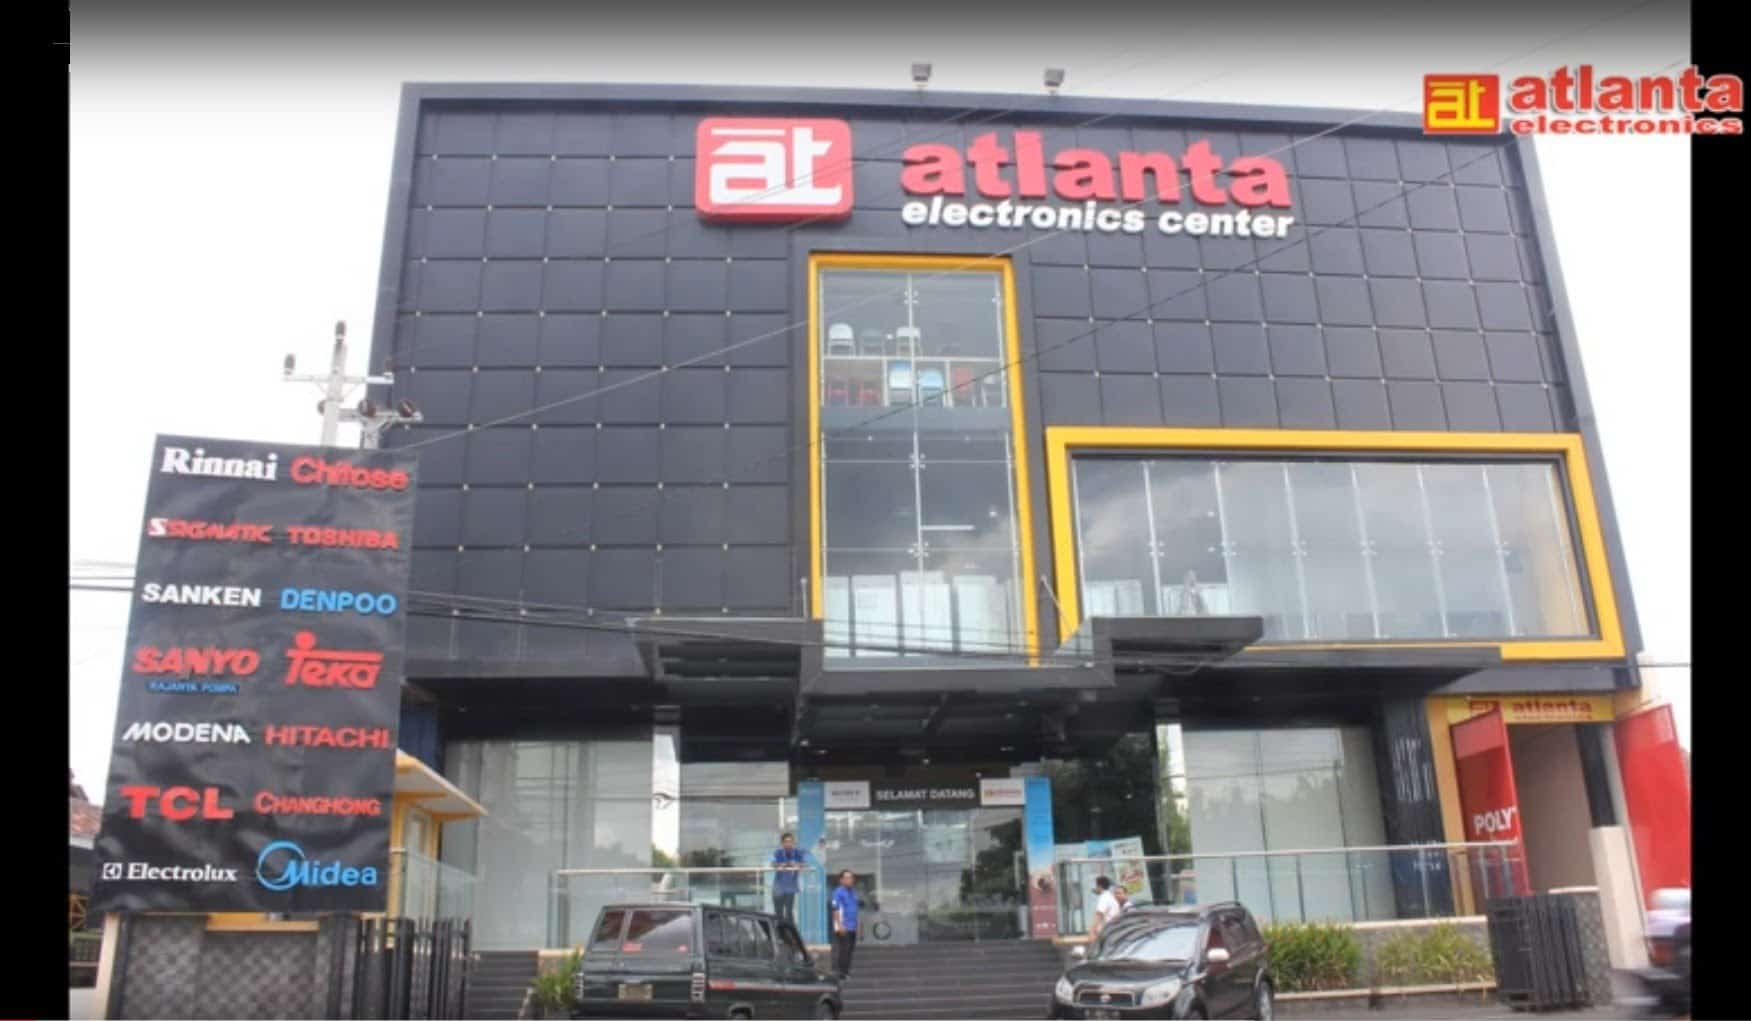 Atlanta Electronics Center